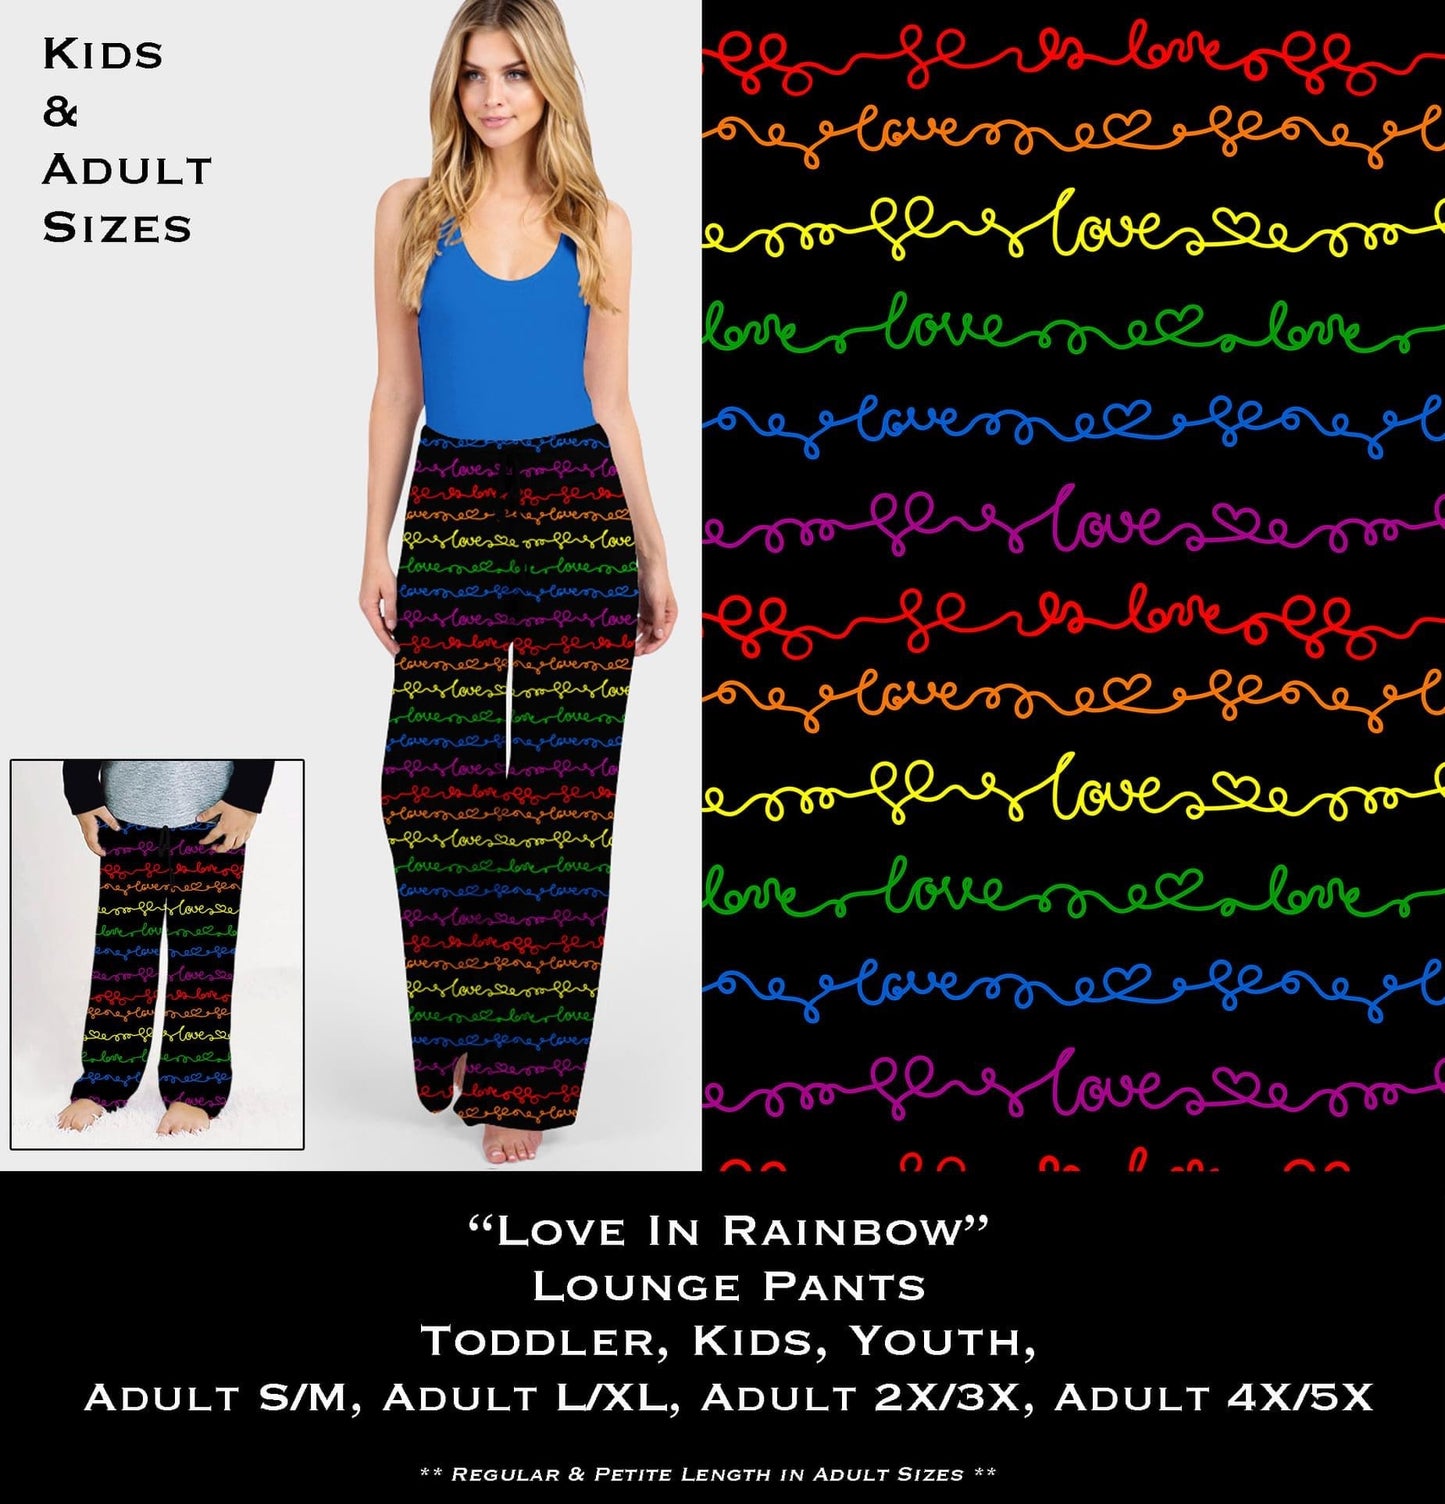 Love in Rainbow - Lounge Pants